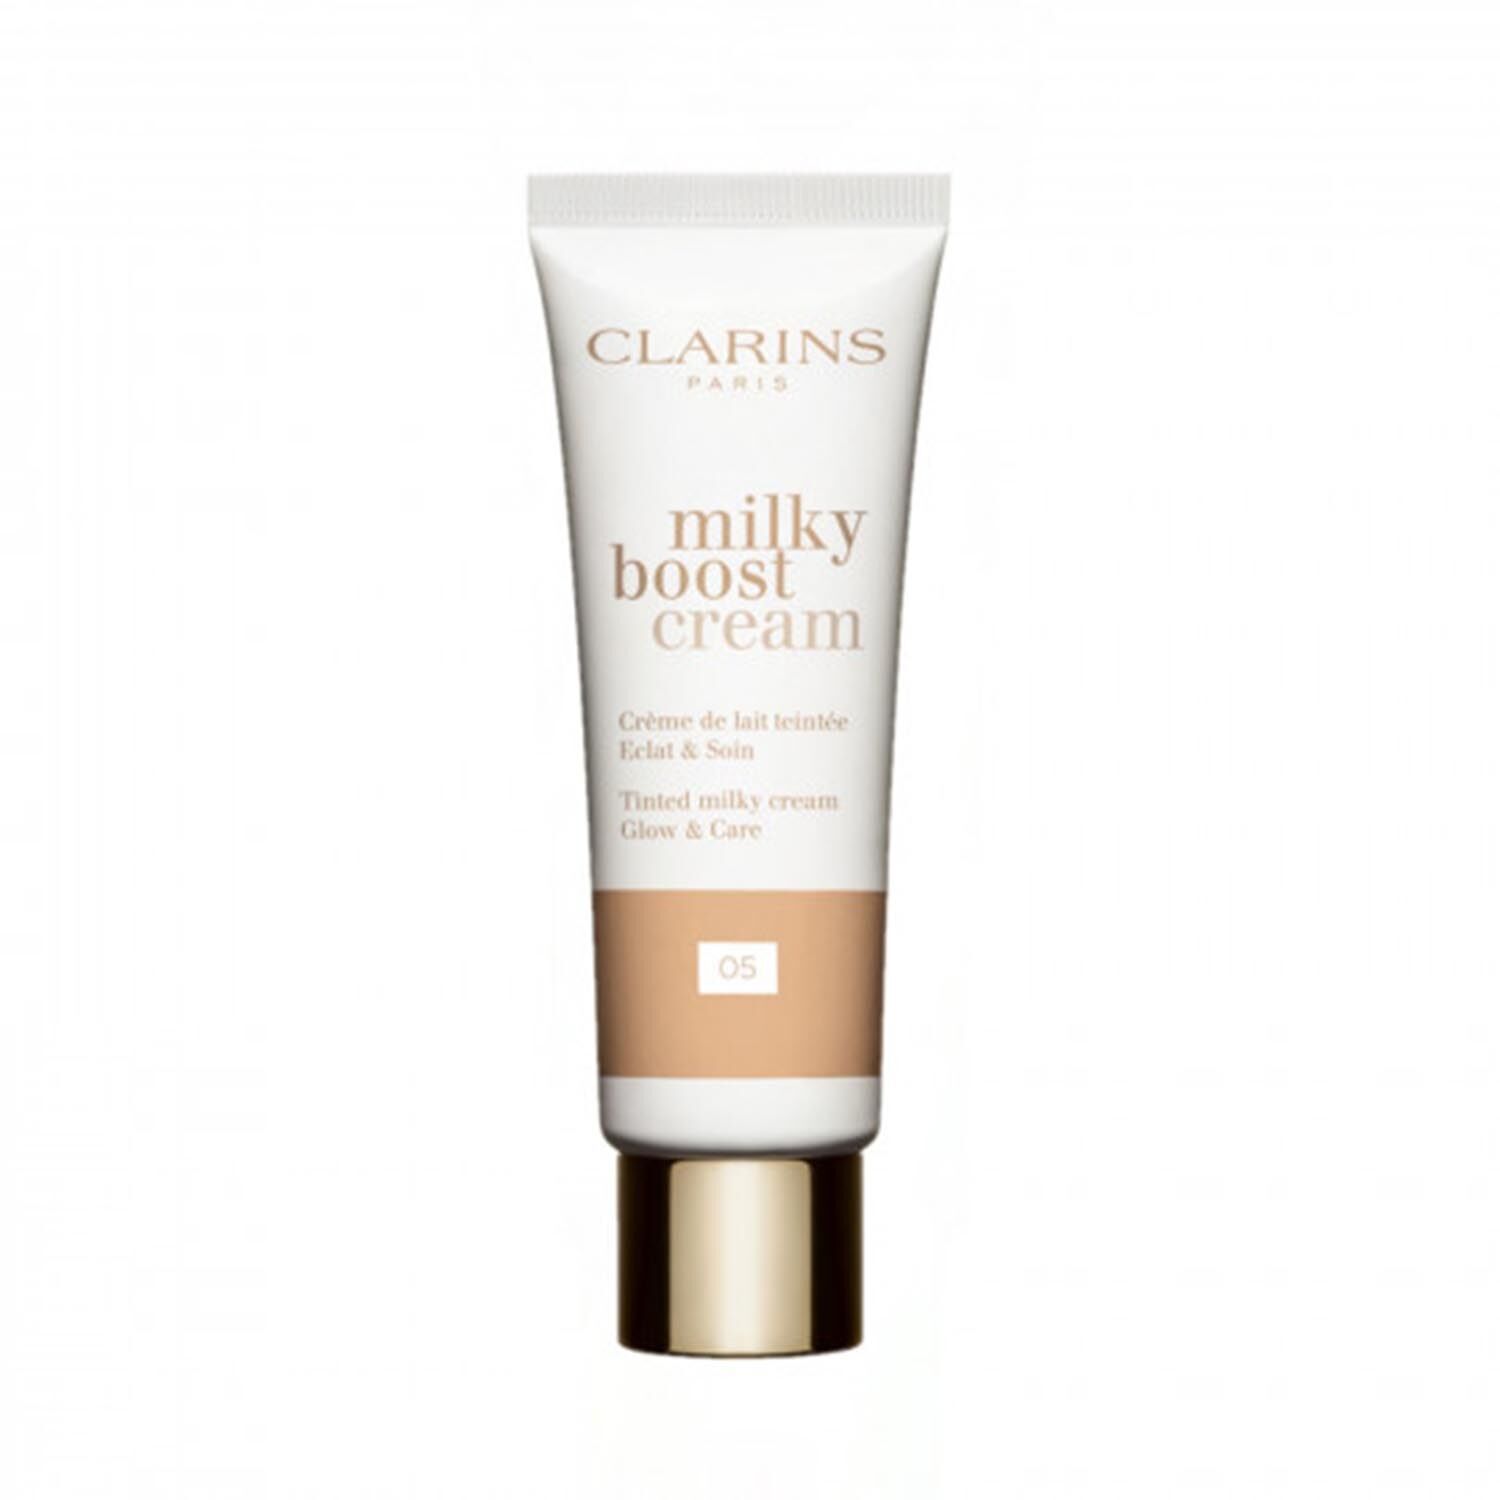 Clarins Milky Boost Cream 05